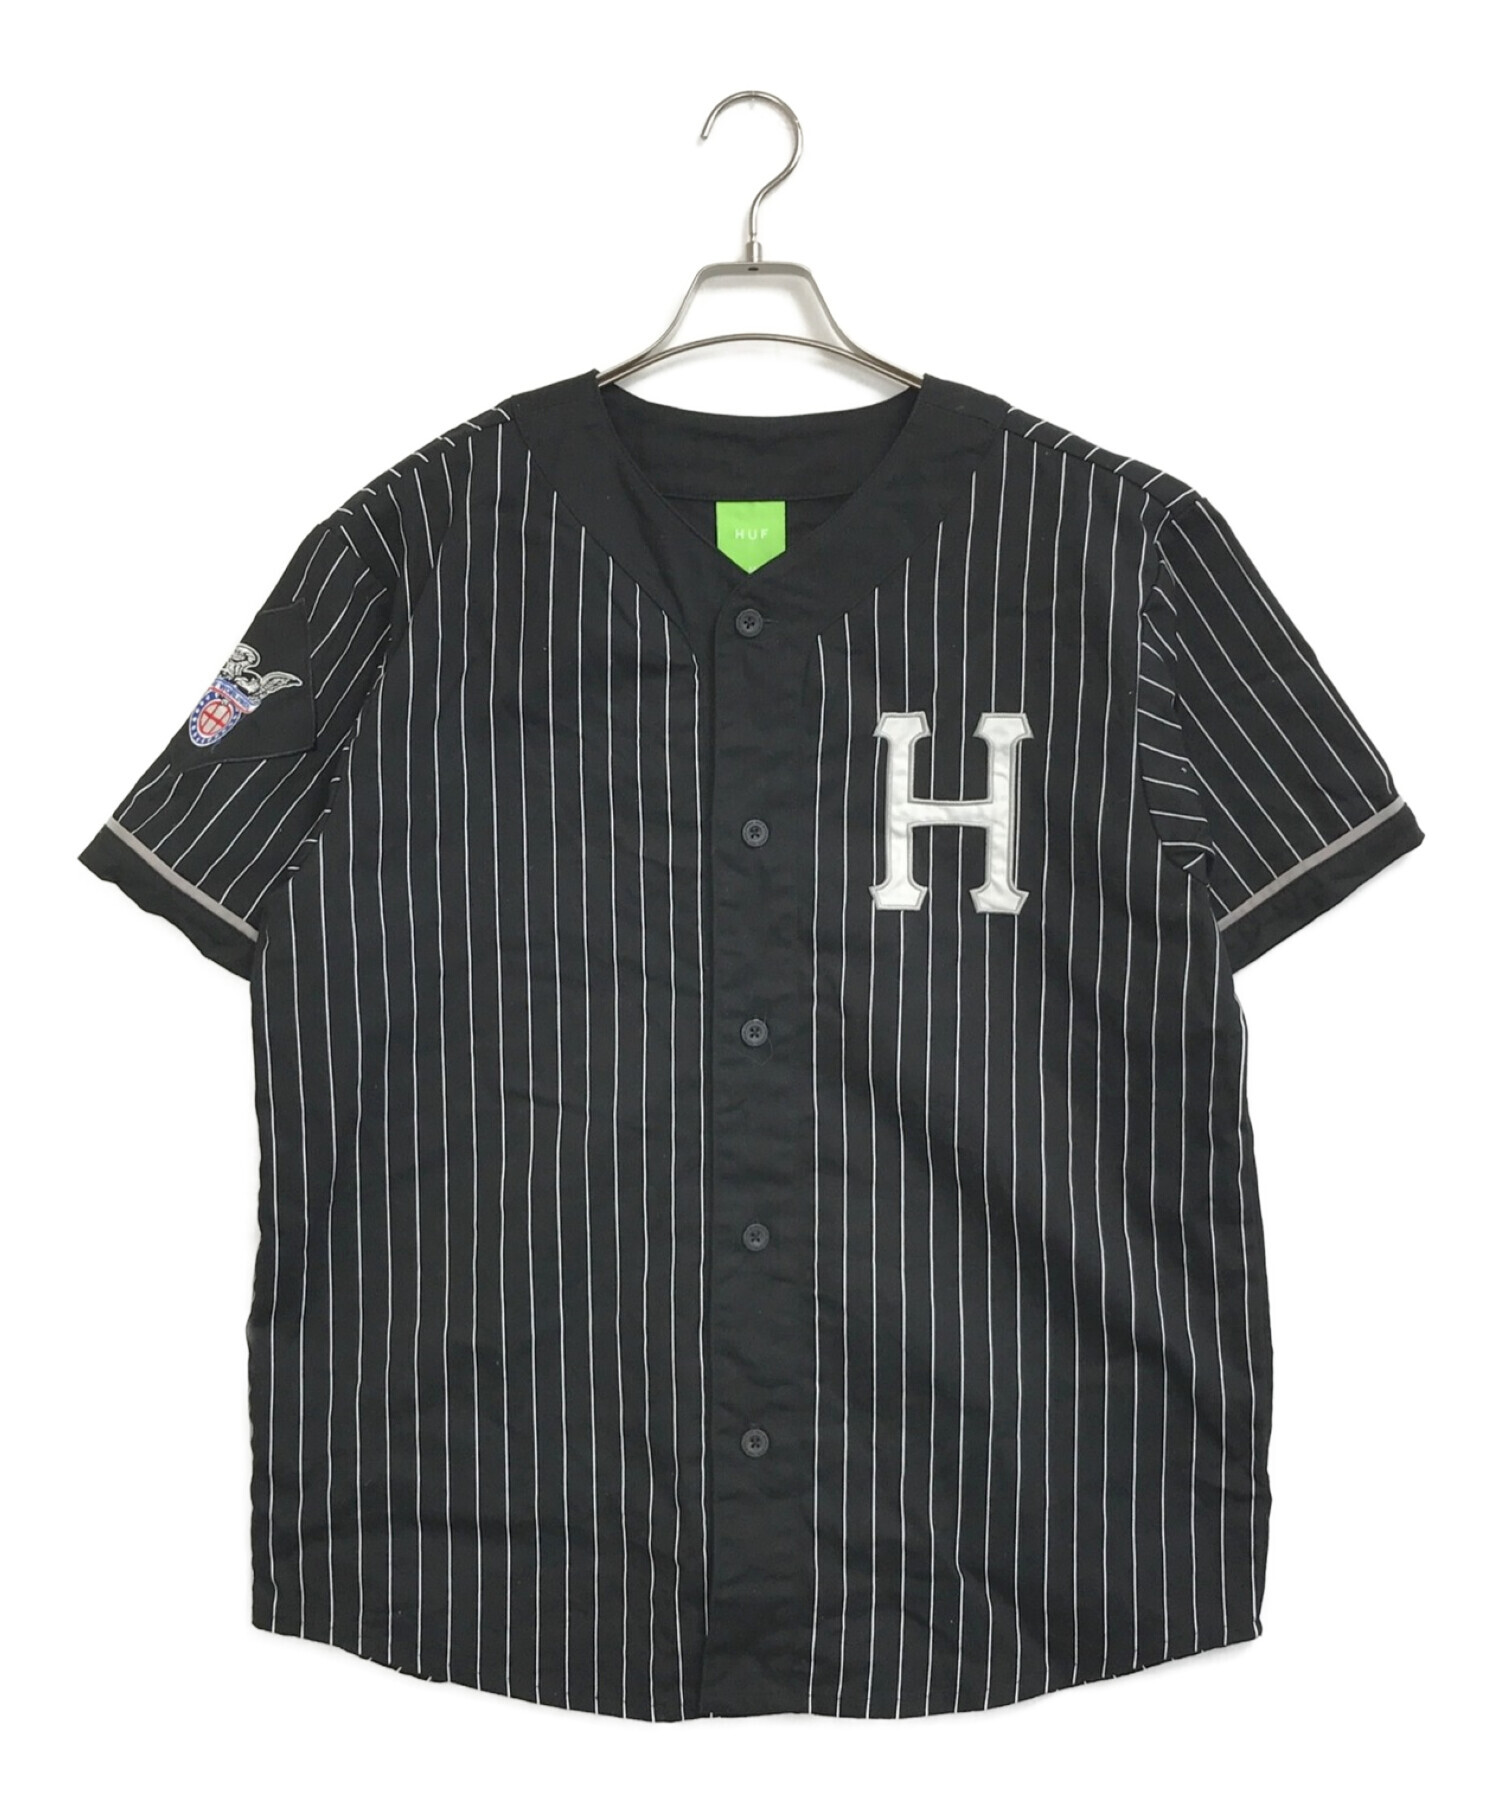 HUF (ハフ) ベースボールシャツ ブラック サイズ:M